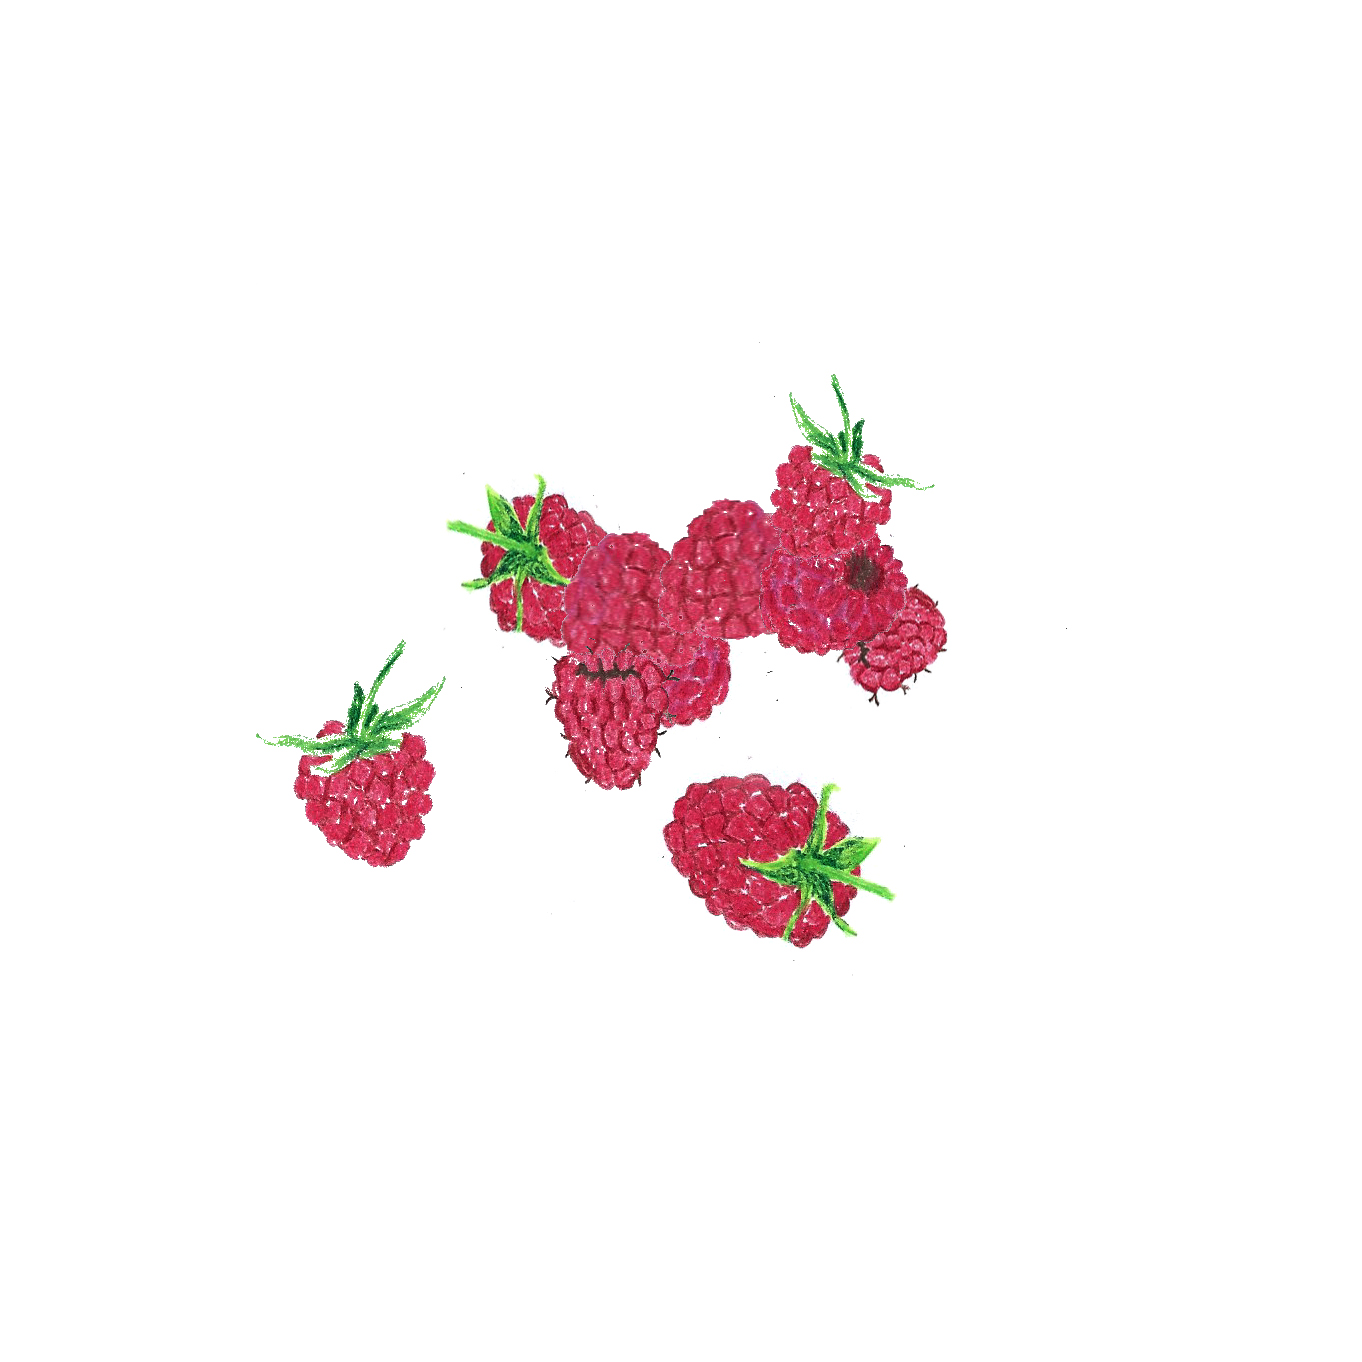 rasberries